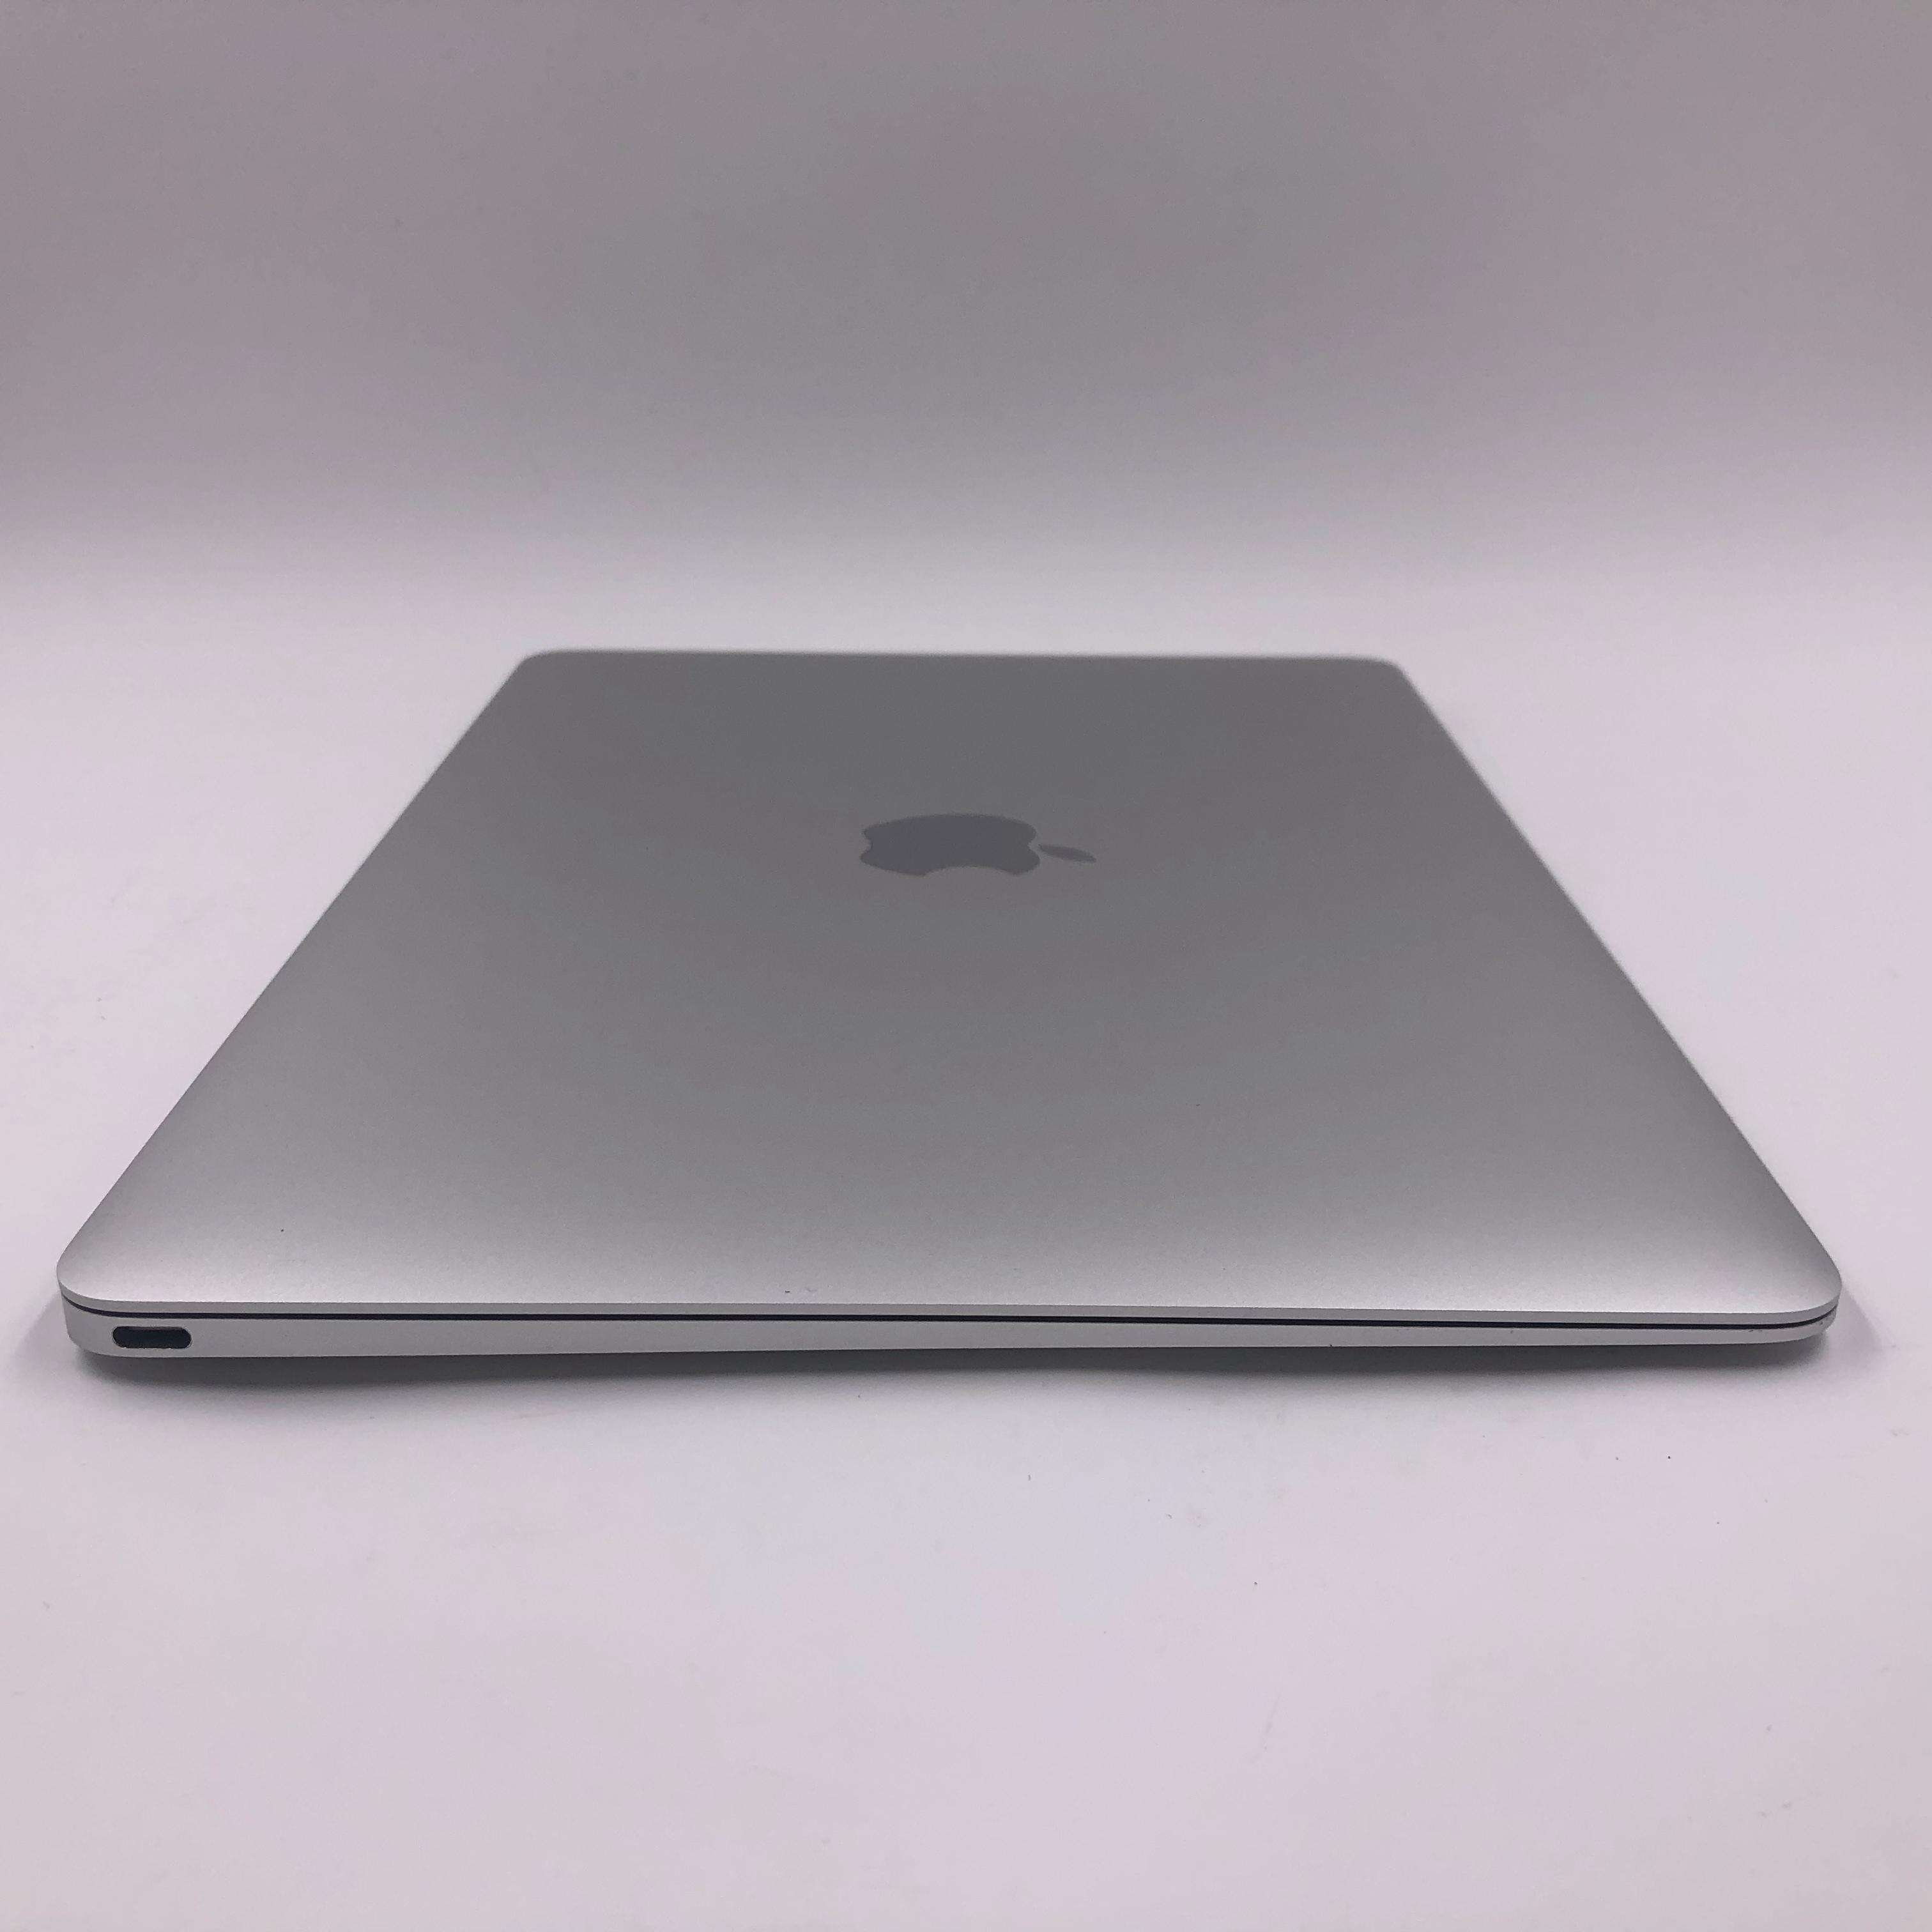 MacBook (12", 2016) CPU_1.2GHz Intel Core M/硬盘_256G 非国行